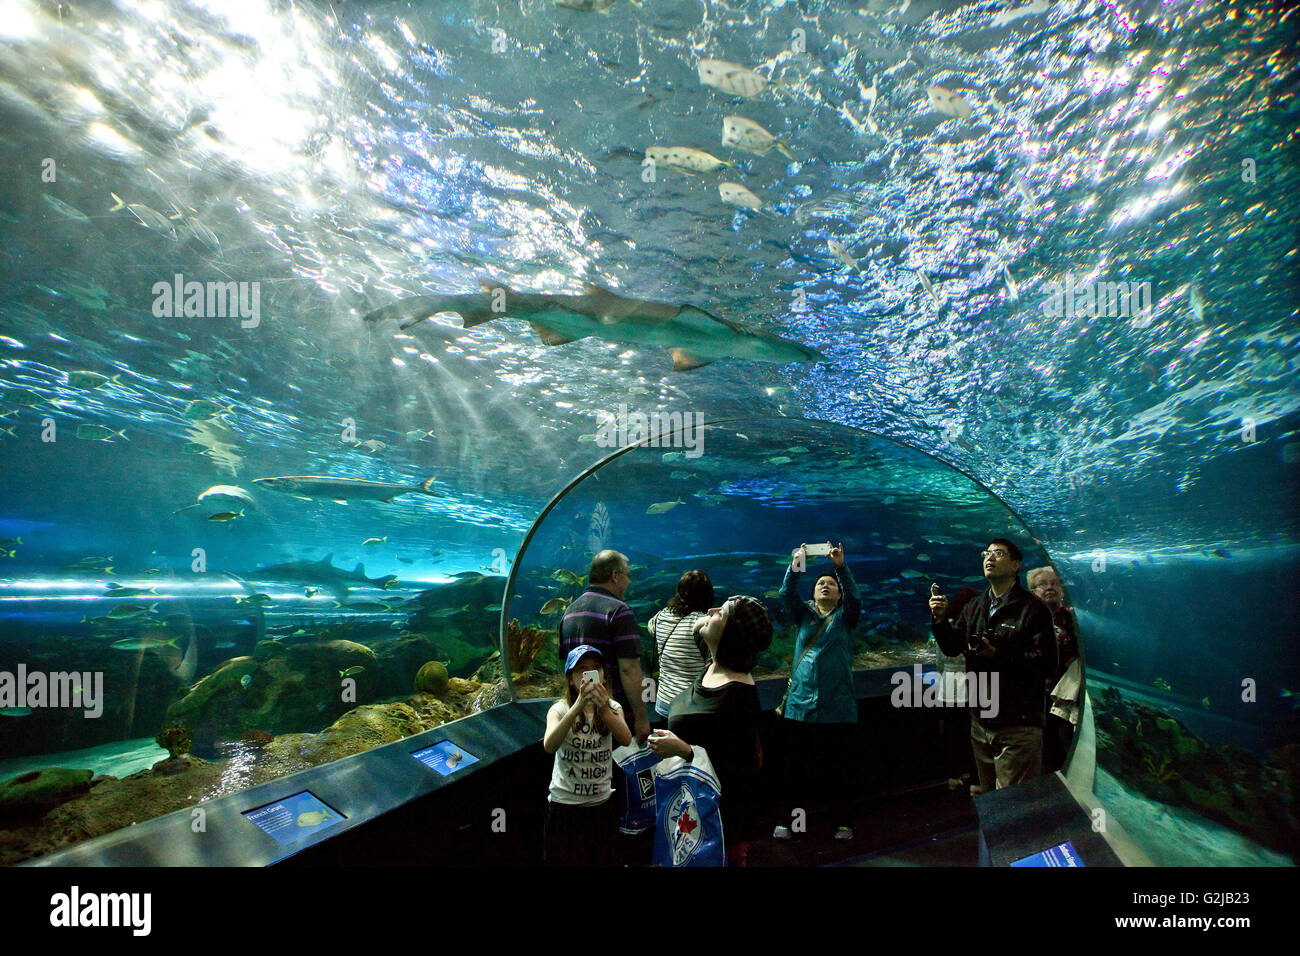 Besucher genießen Dangerous Lagune am Laufband am Riply des Aquarium of Canada auf Basis des CN Tower in Toronto, Kanada. Stockfoto